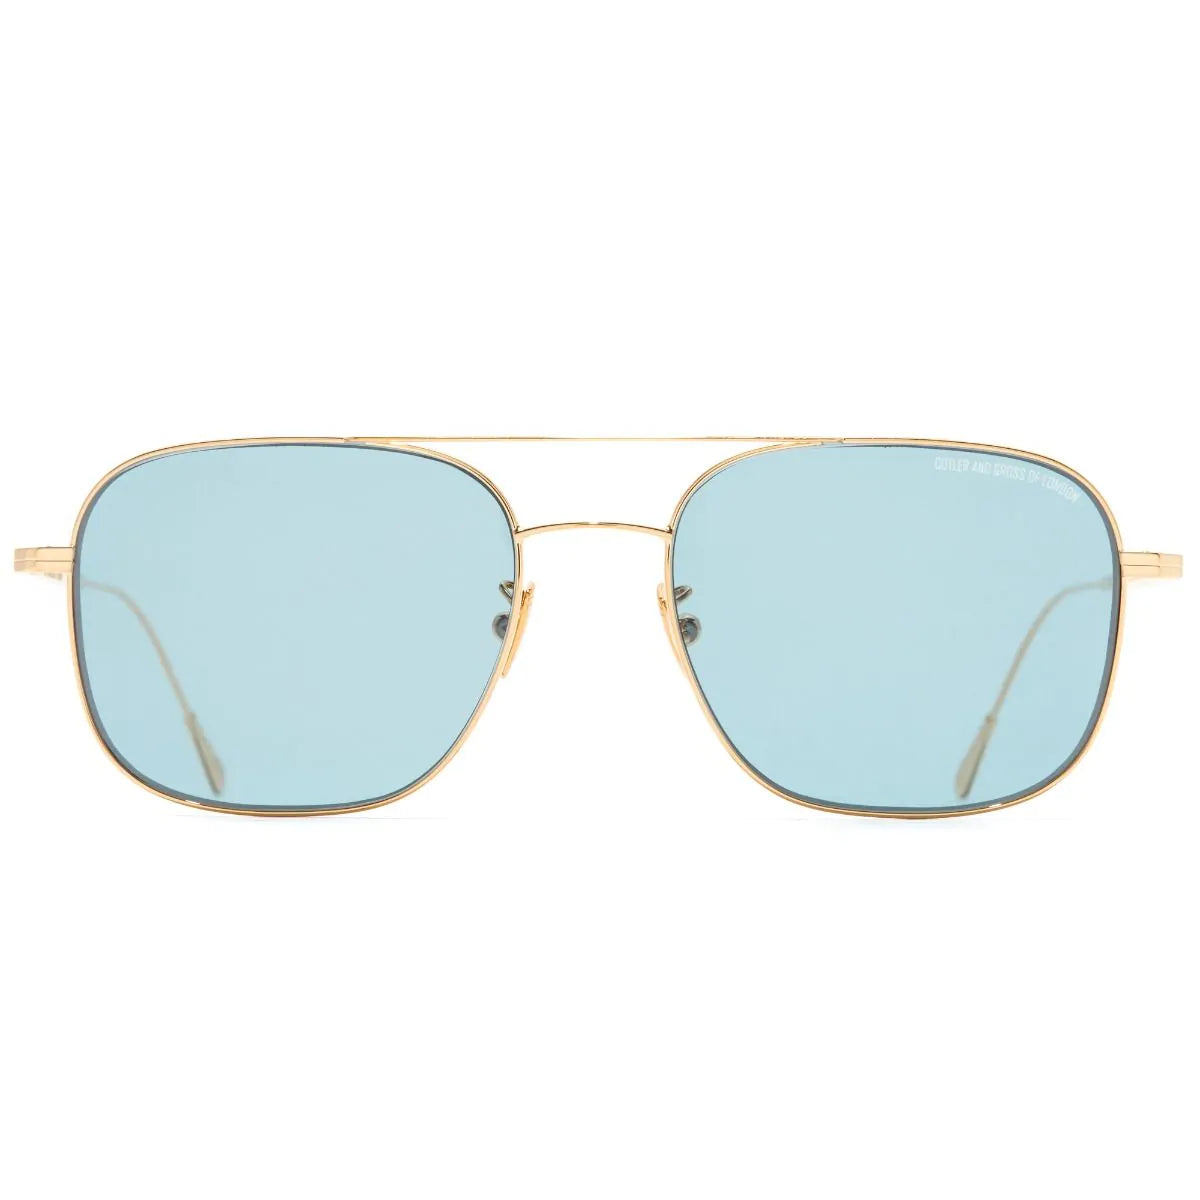 0003 Aviator Sunglasses - Gold 18K by Cutler and Gross